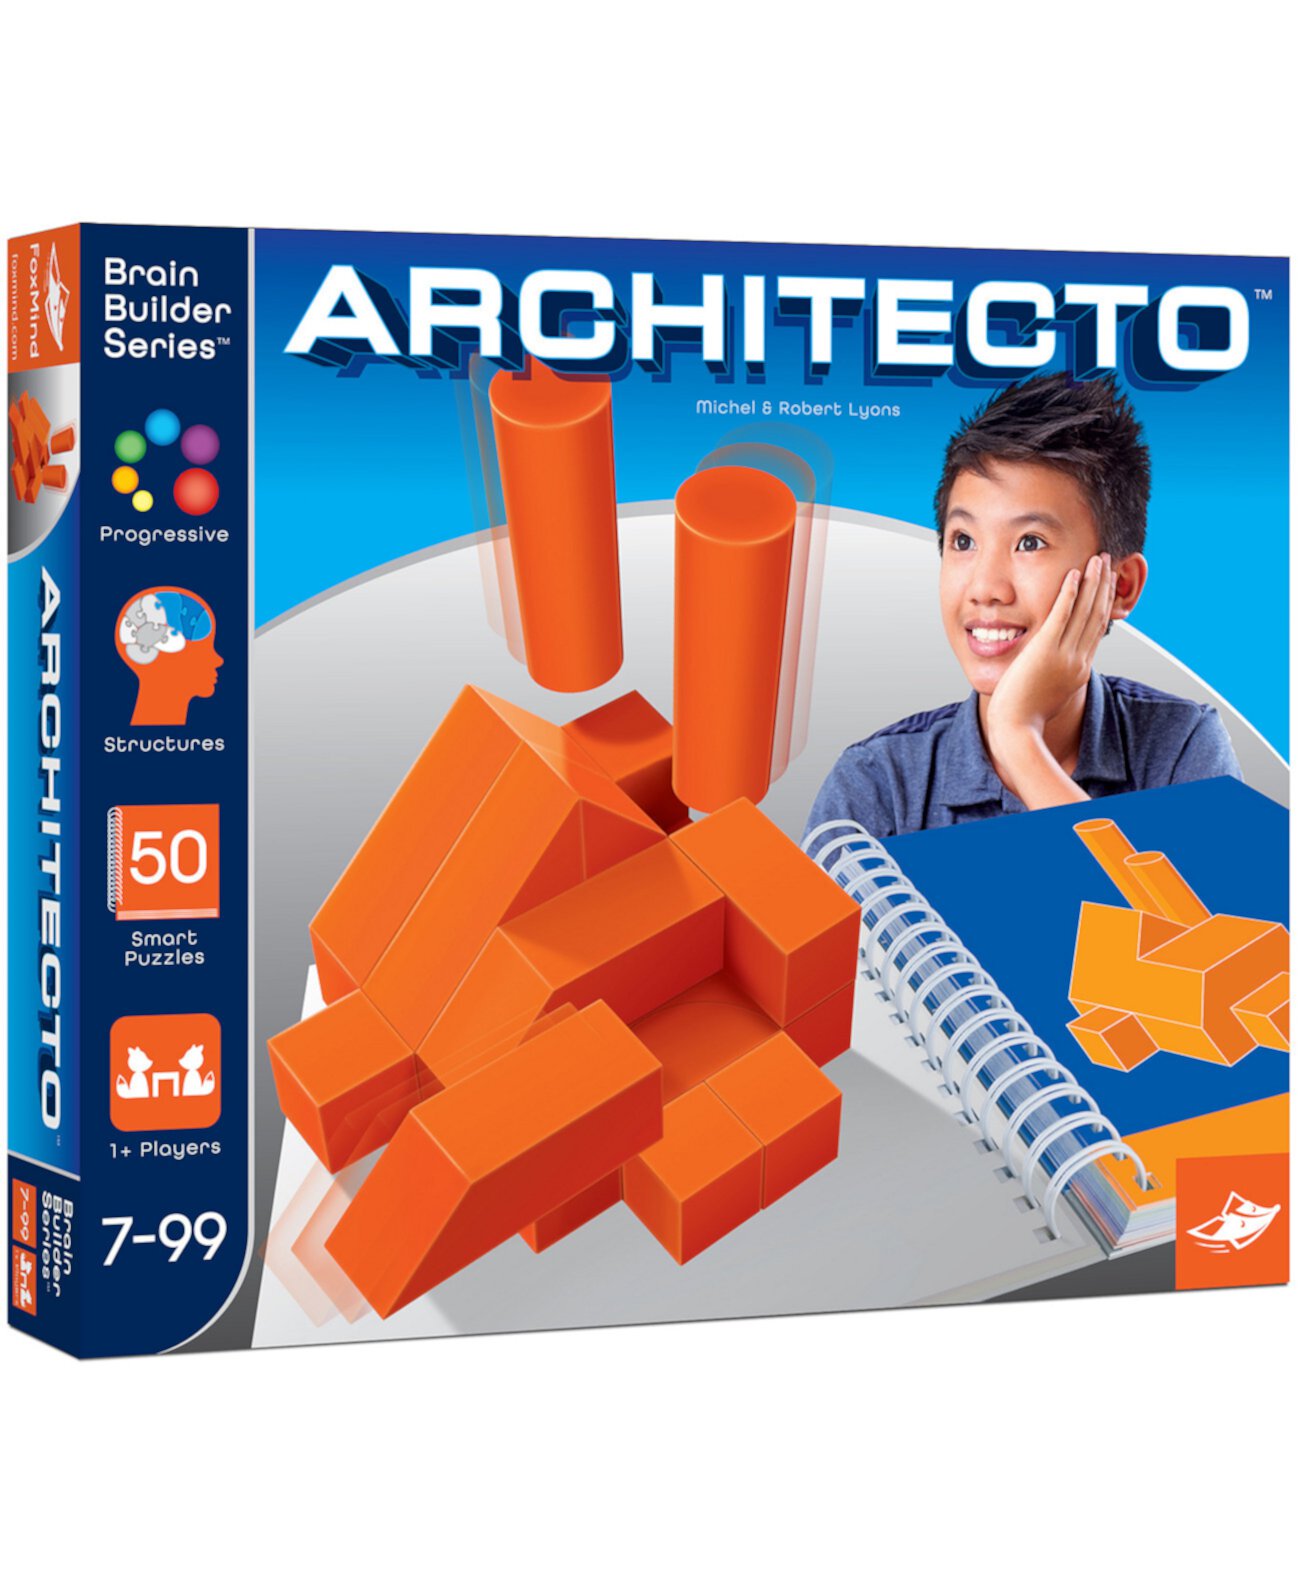 Architecto FoxMind Games